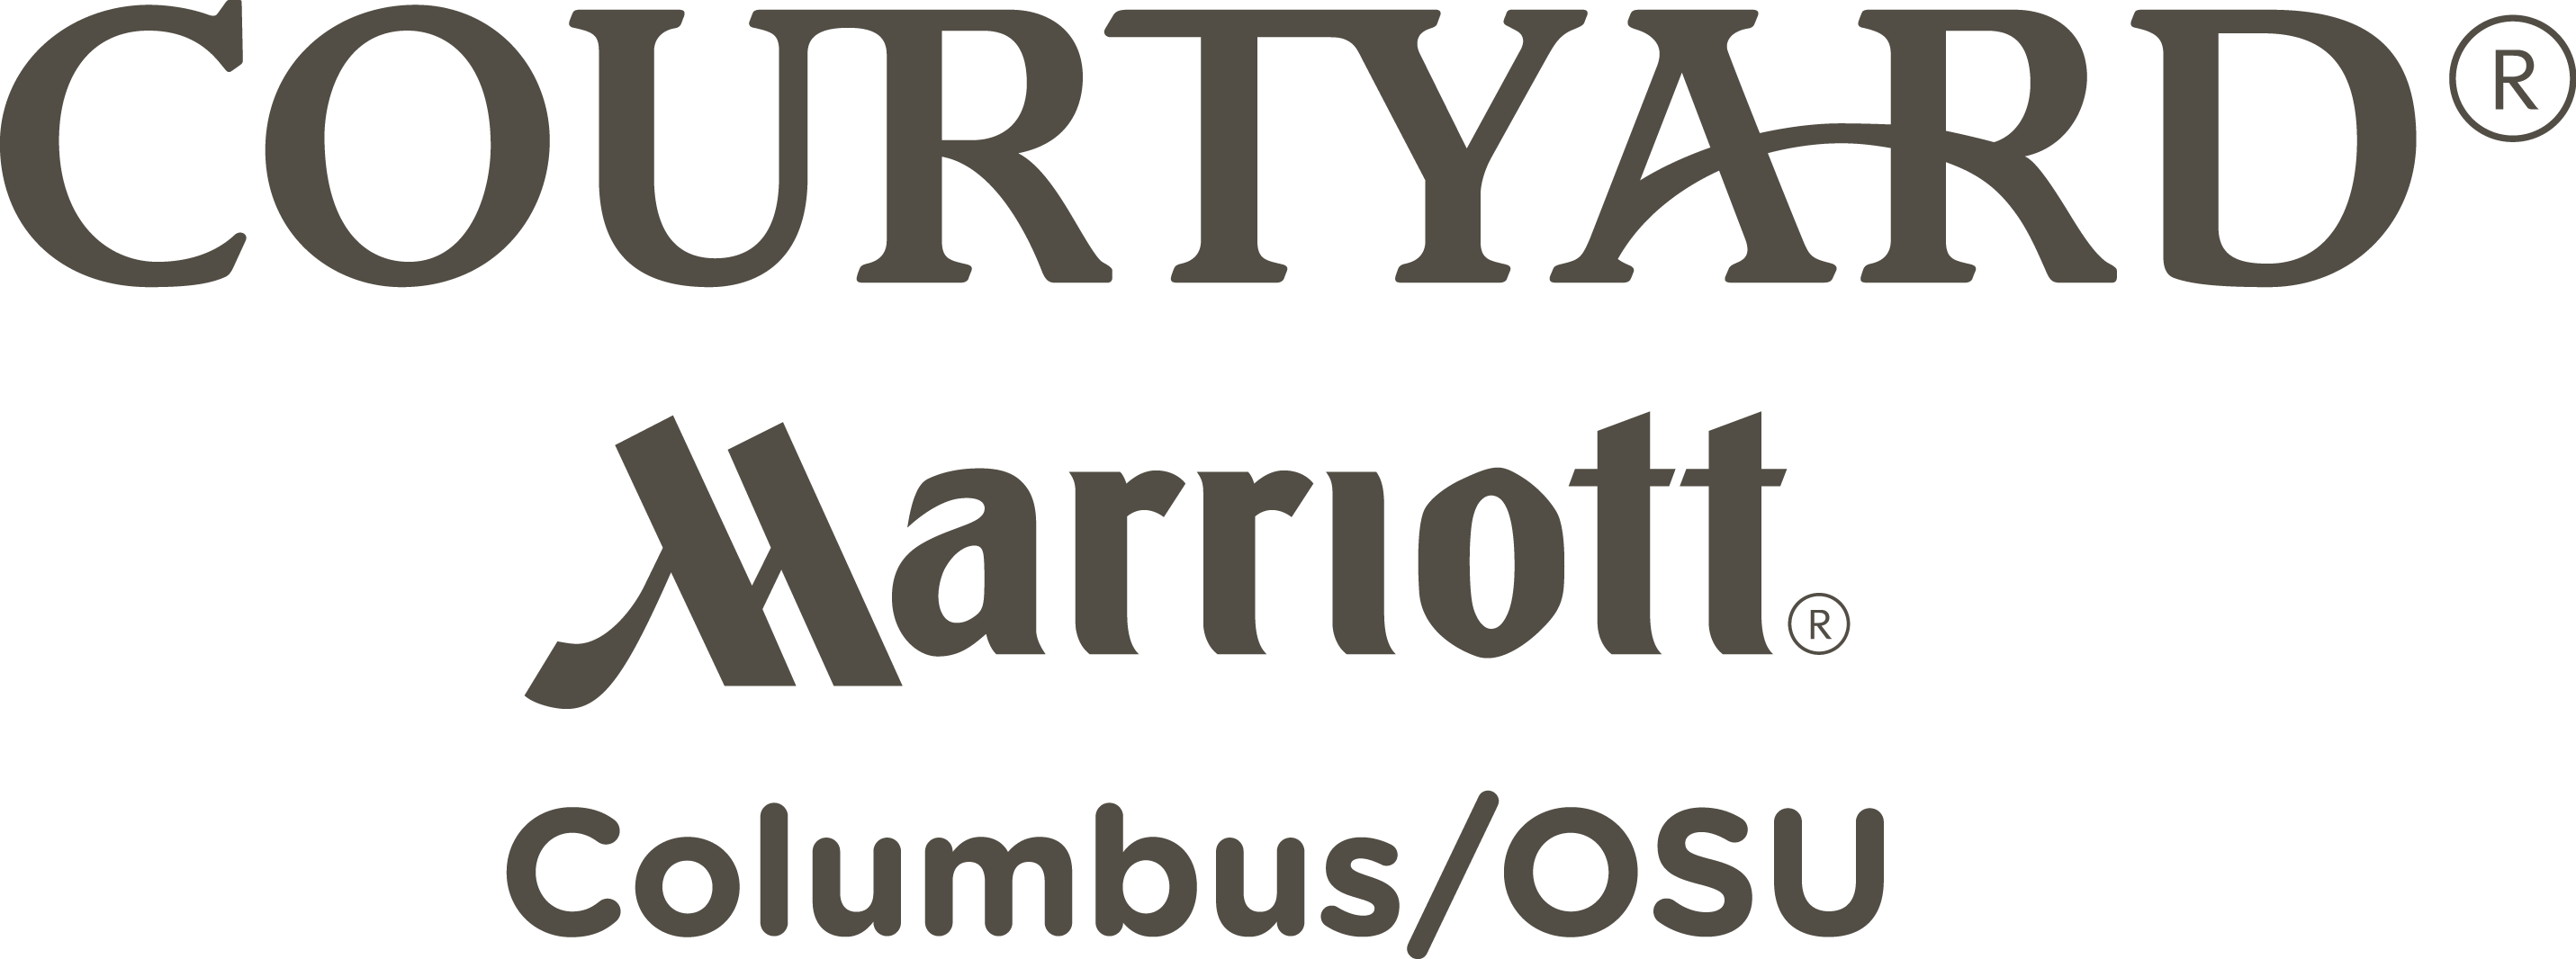 Courtyard Marriott Columbus O S U Logo PNG